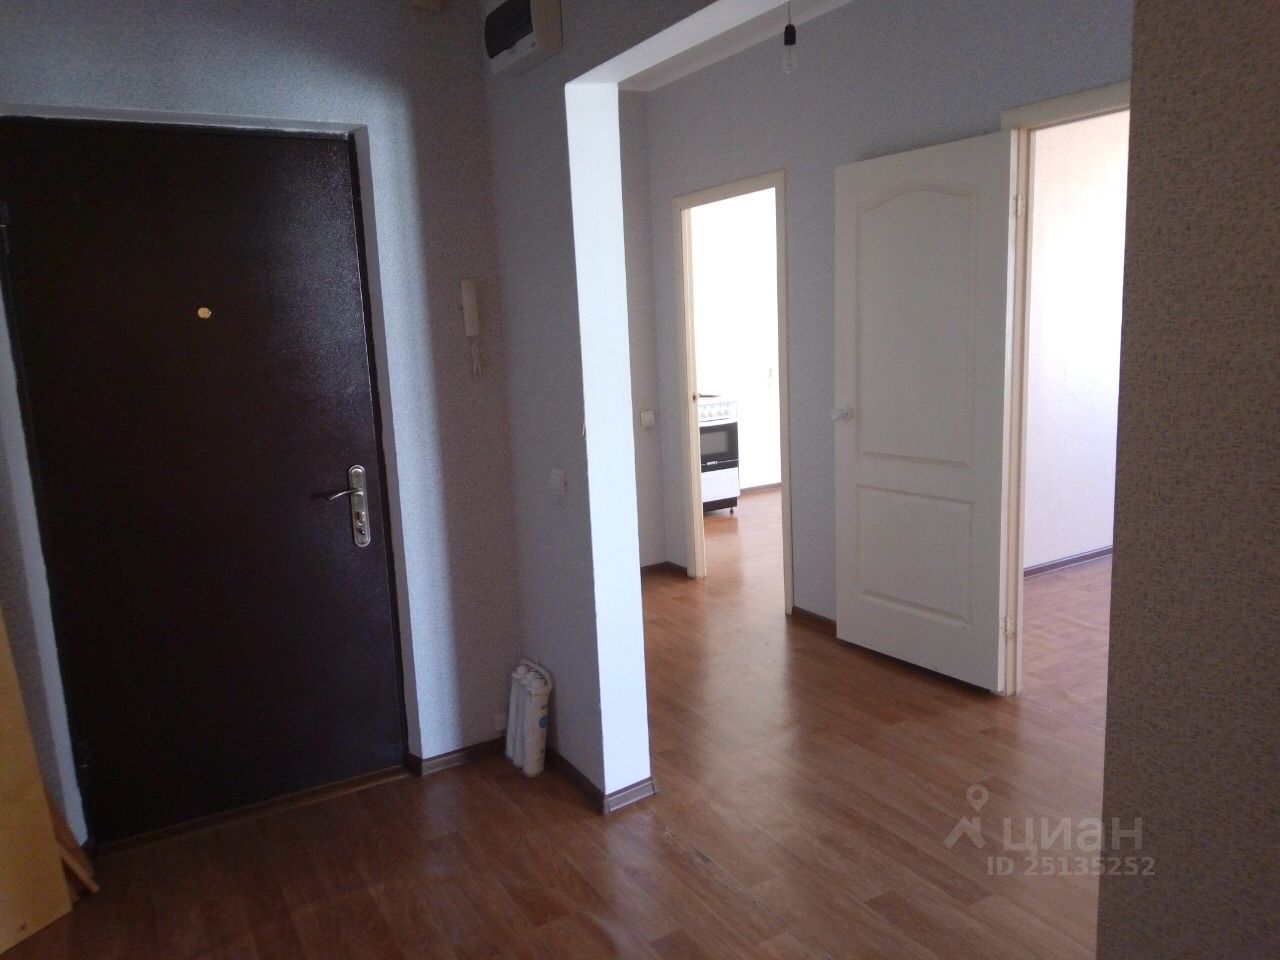 Квартира в доме 2014 года стоит около 1<nobr class="_">00 00</nobr>0 рублей за квадрат